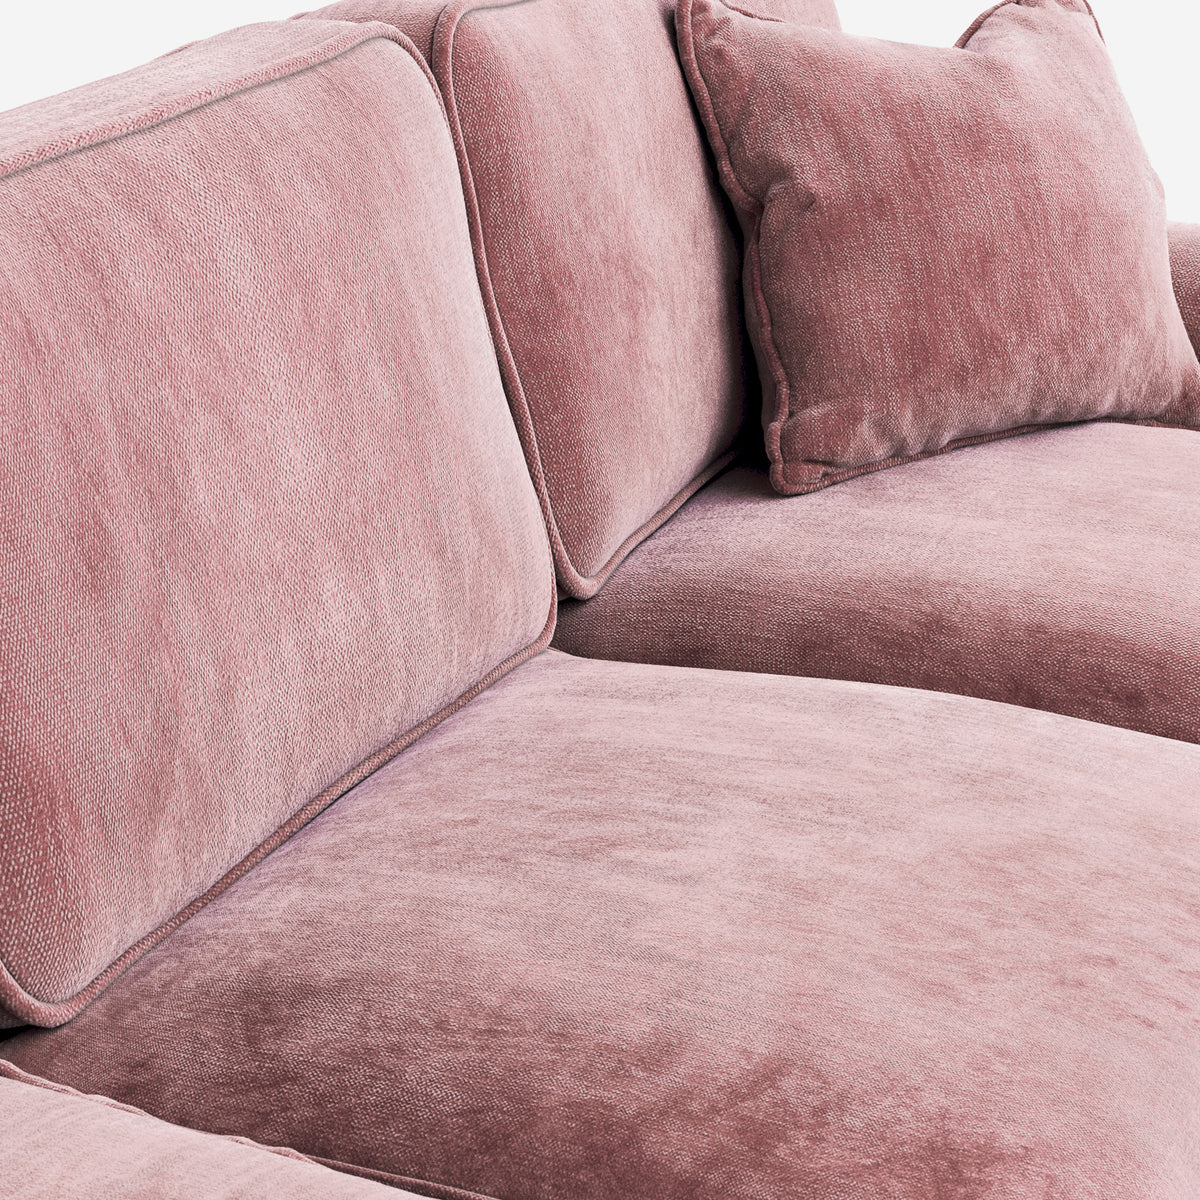 Alfie Blush Pink 2 Seater Sofa from Roseland Furniture